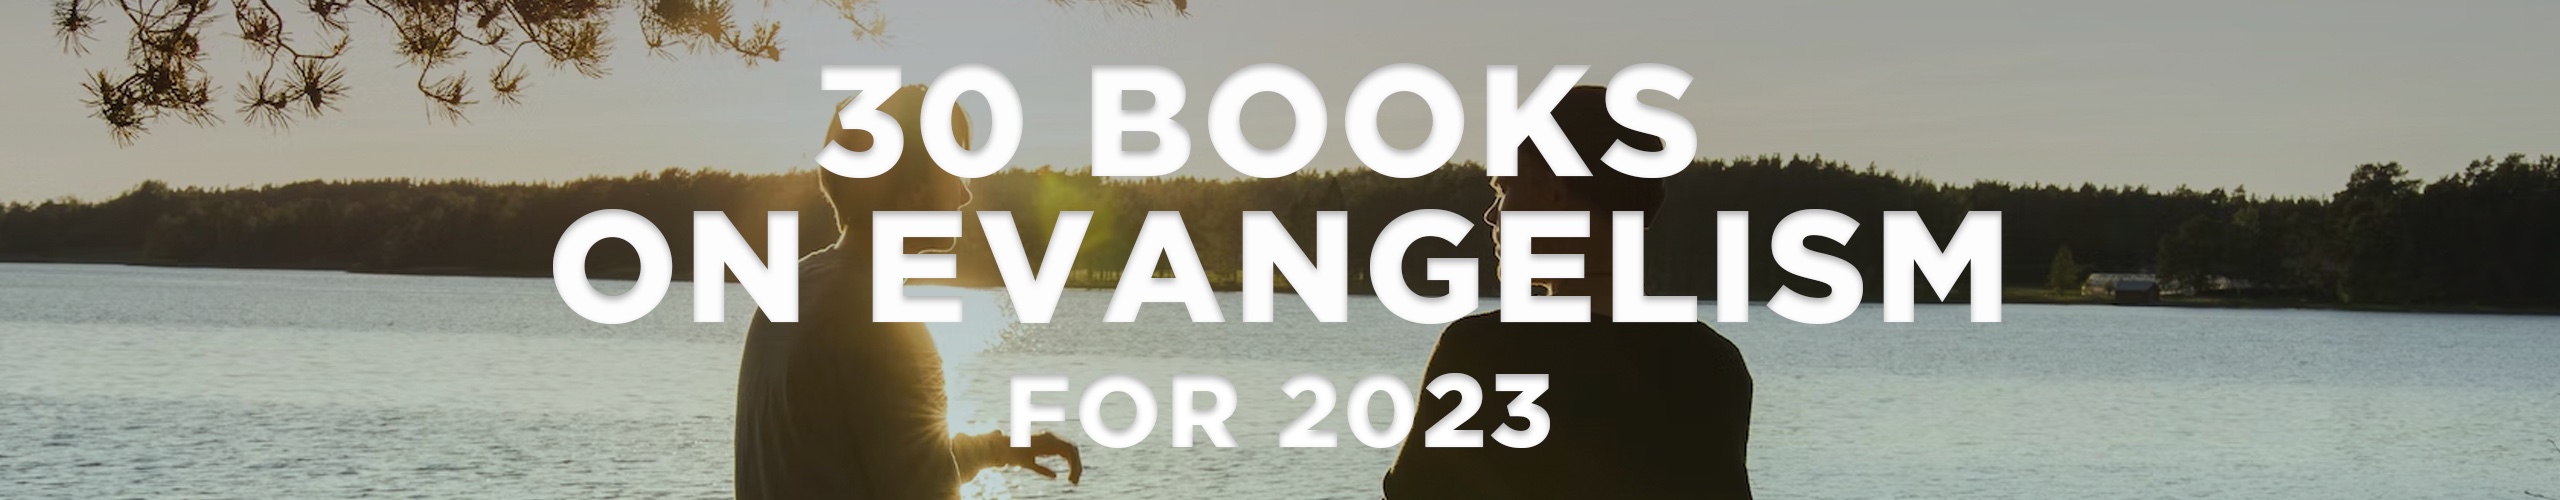 30-books-on-evangelism copy